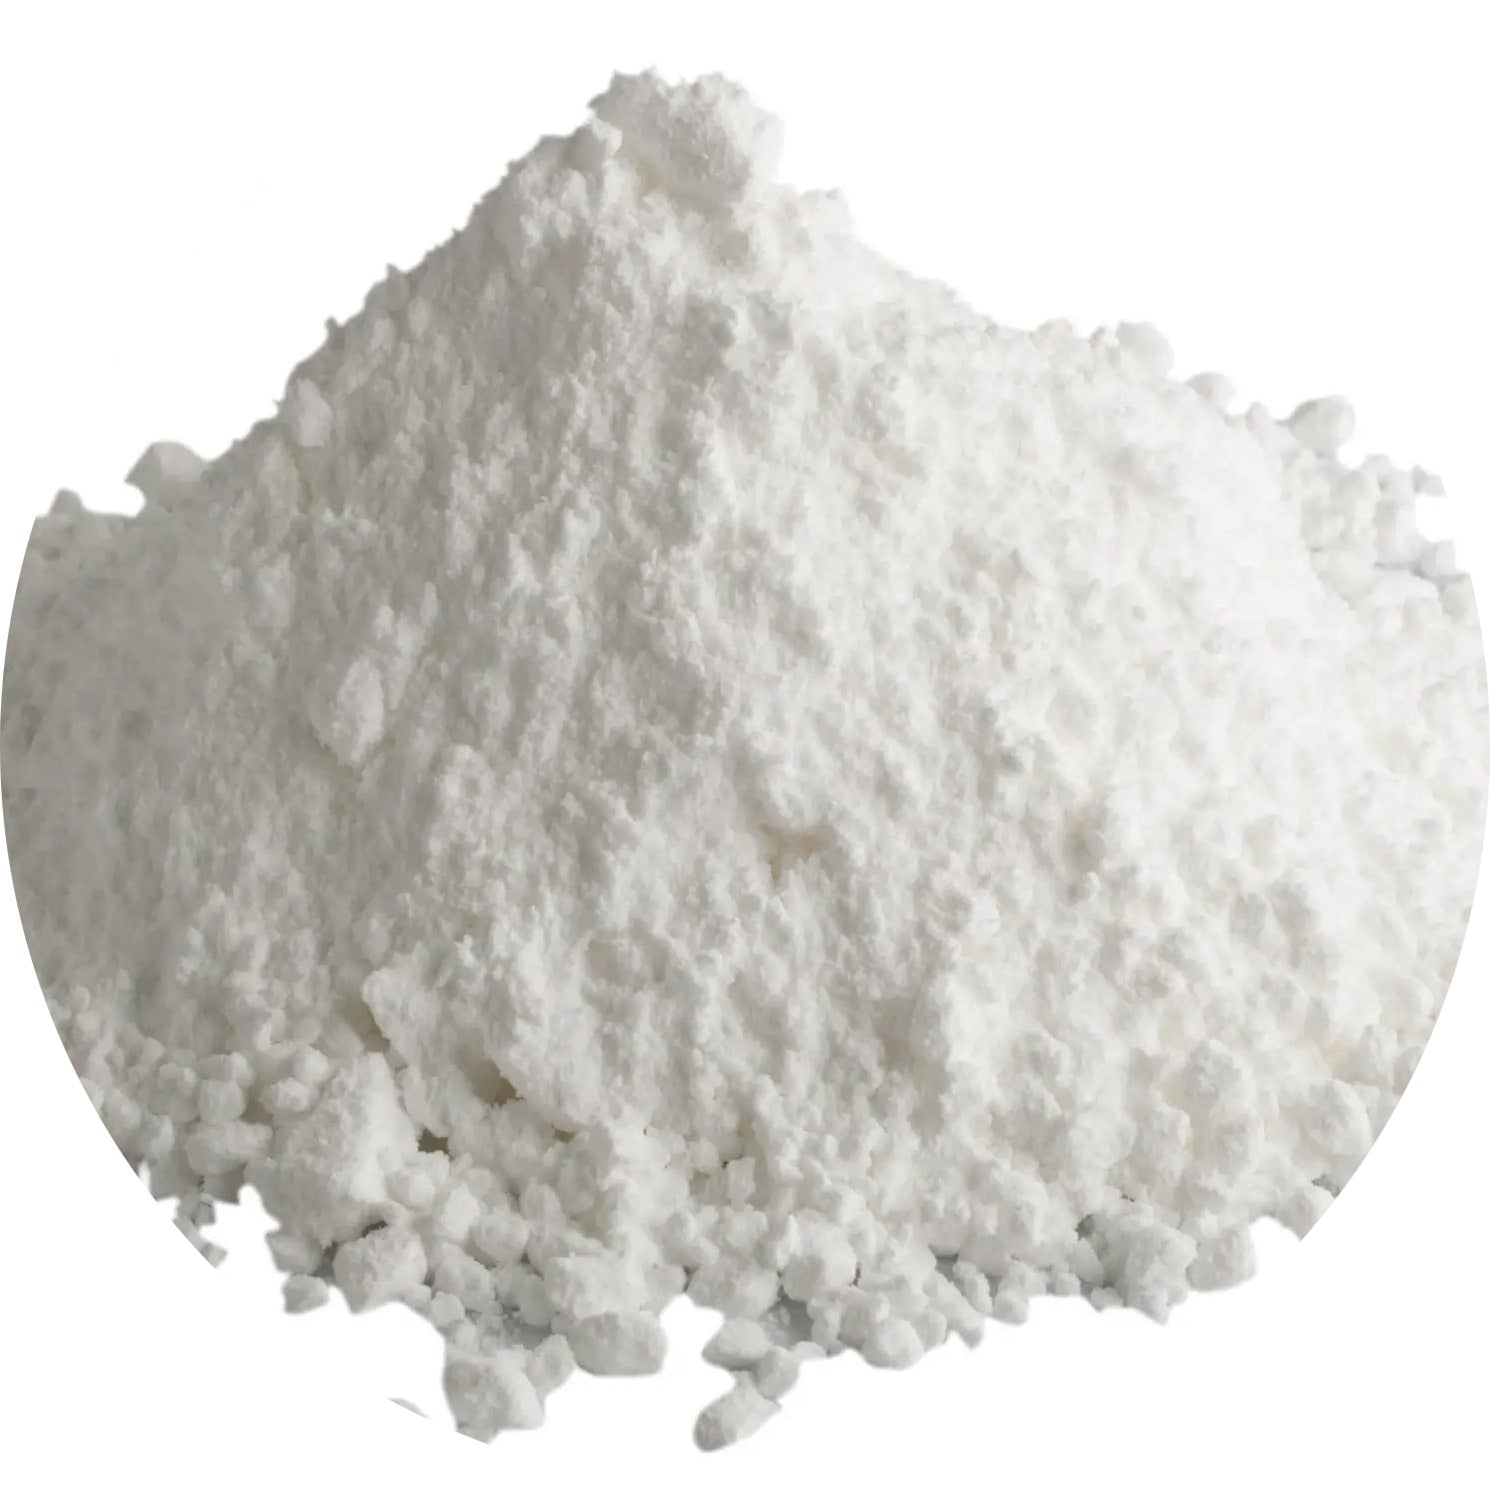 Small mound of Glycogen powder